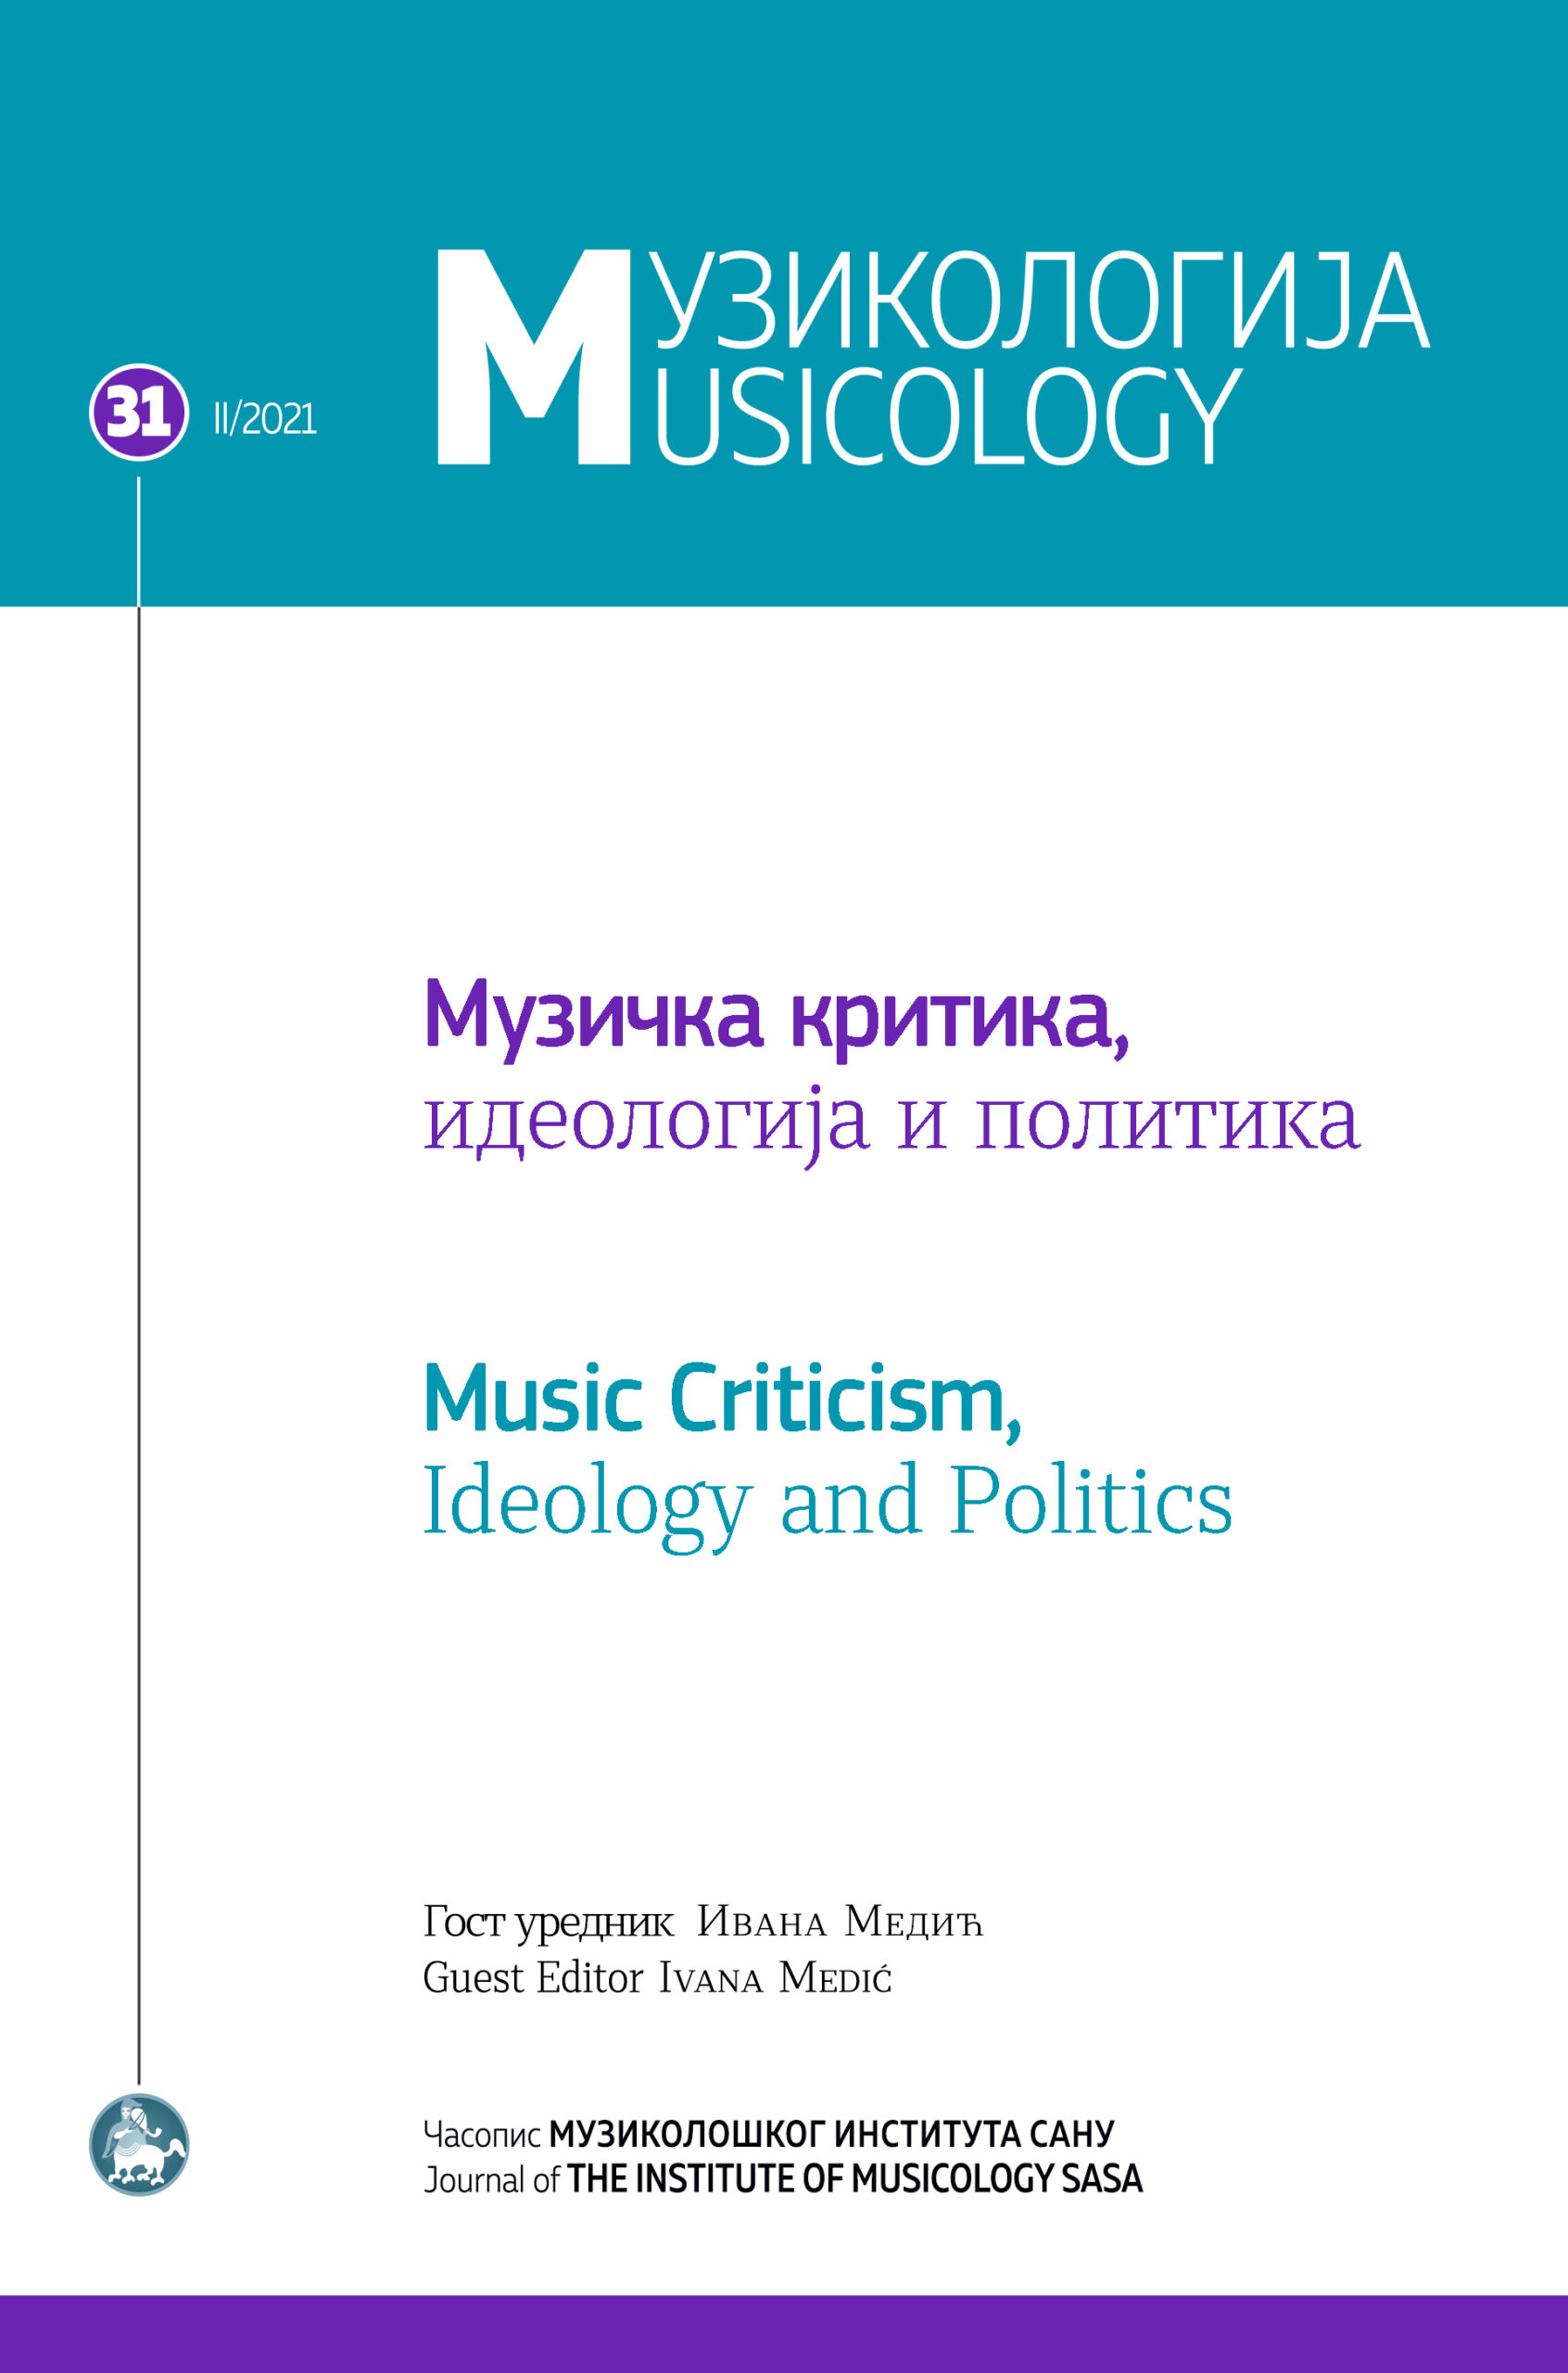 Musicology 31